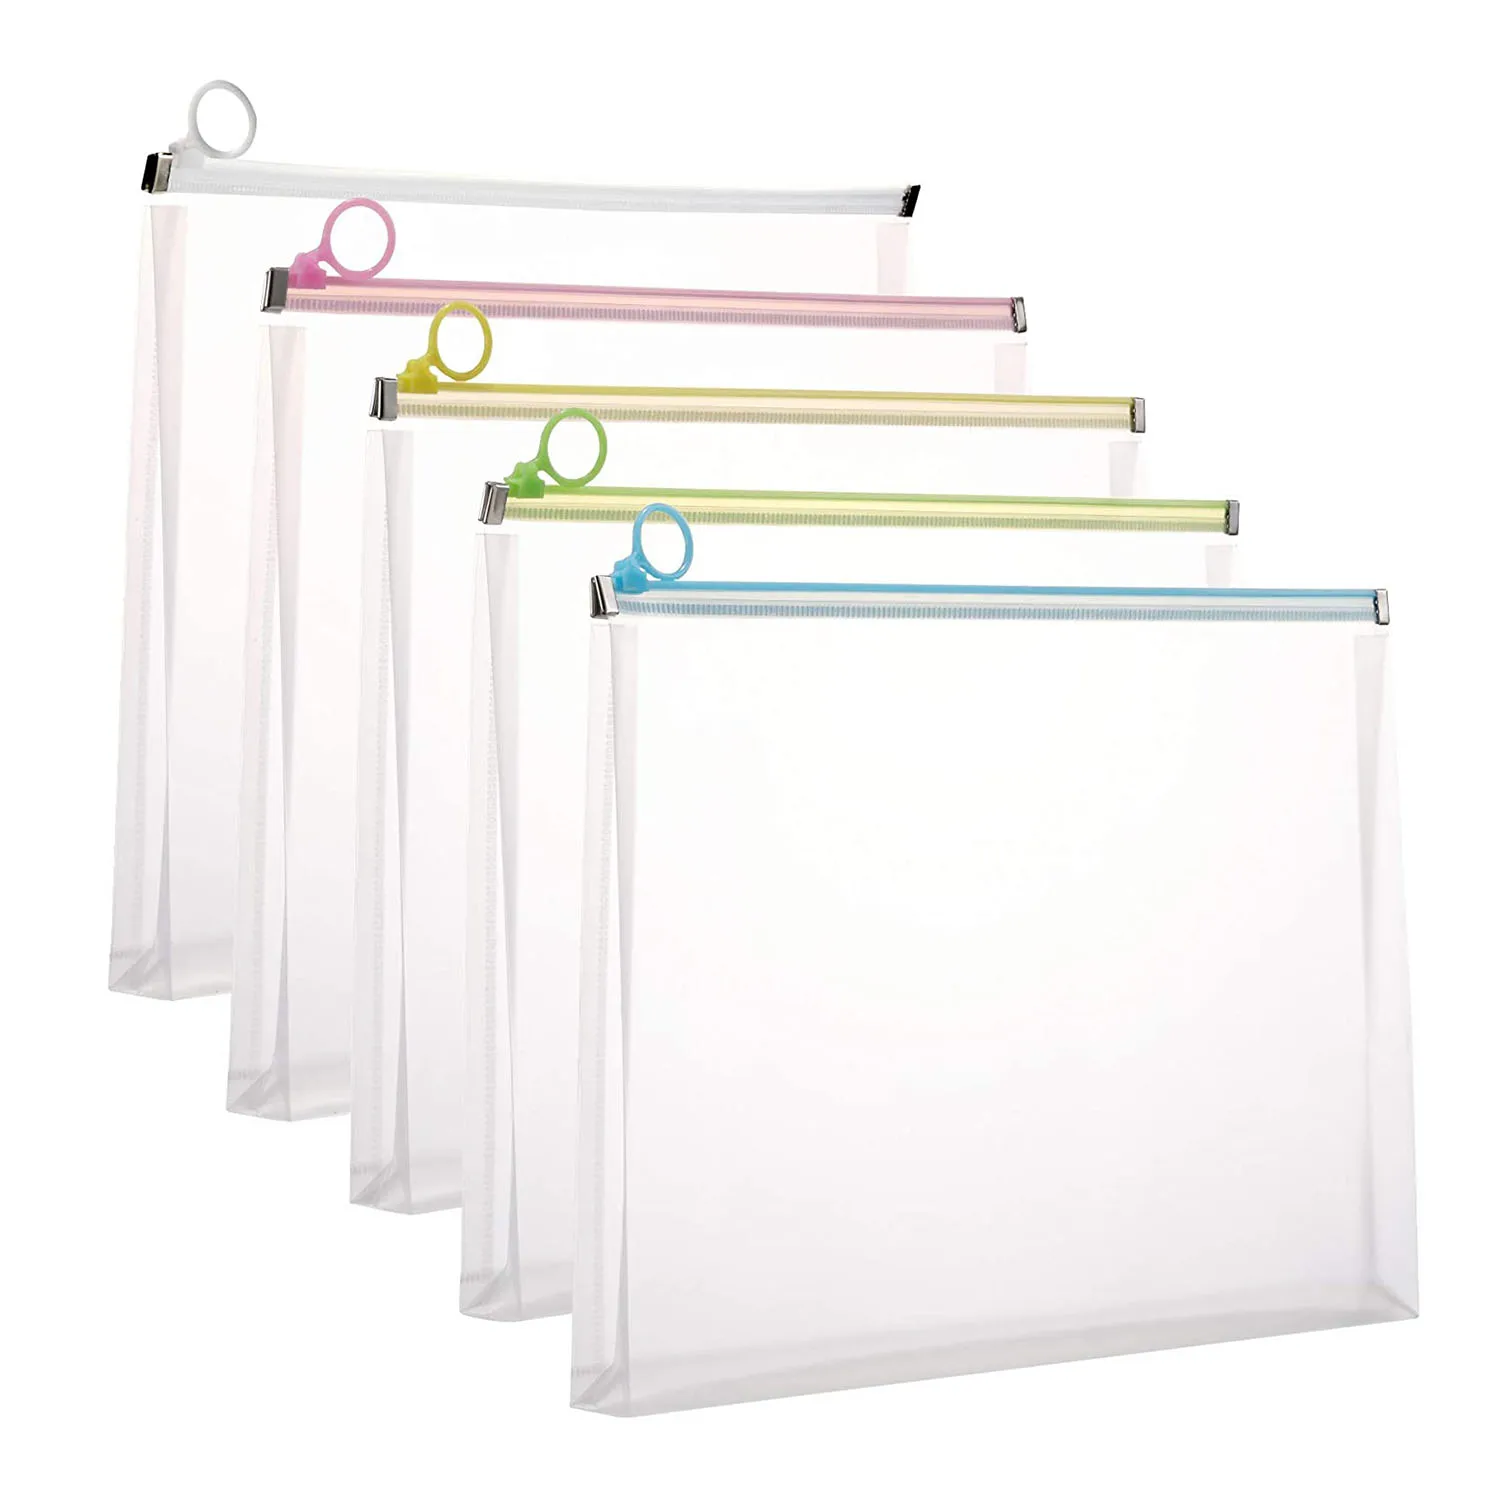 

5 Pieces/Set A5 Plastic Translucent Zipper Envelopes Folder Case Assorted Colorsfor Office Document, Worksheet, Receipts